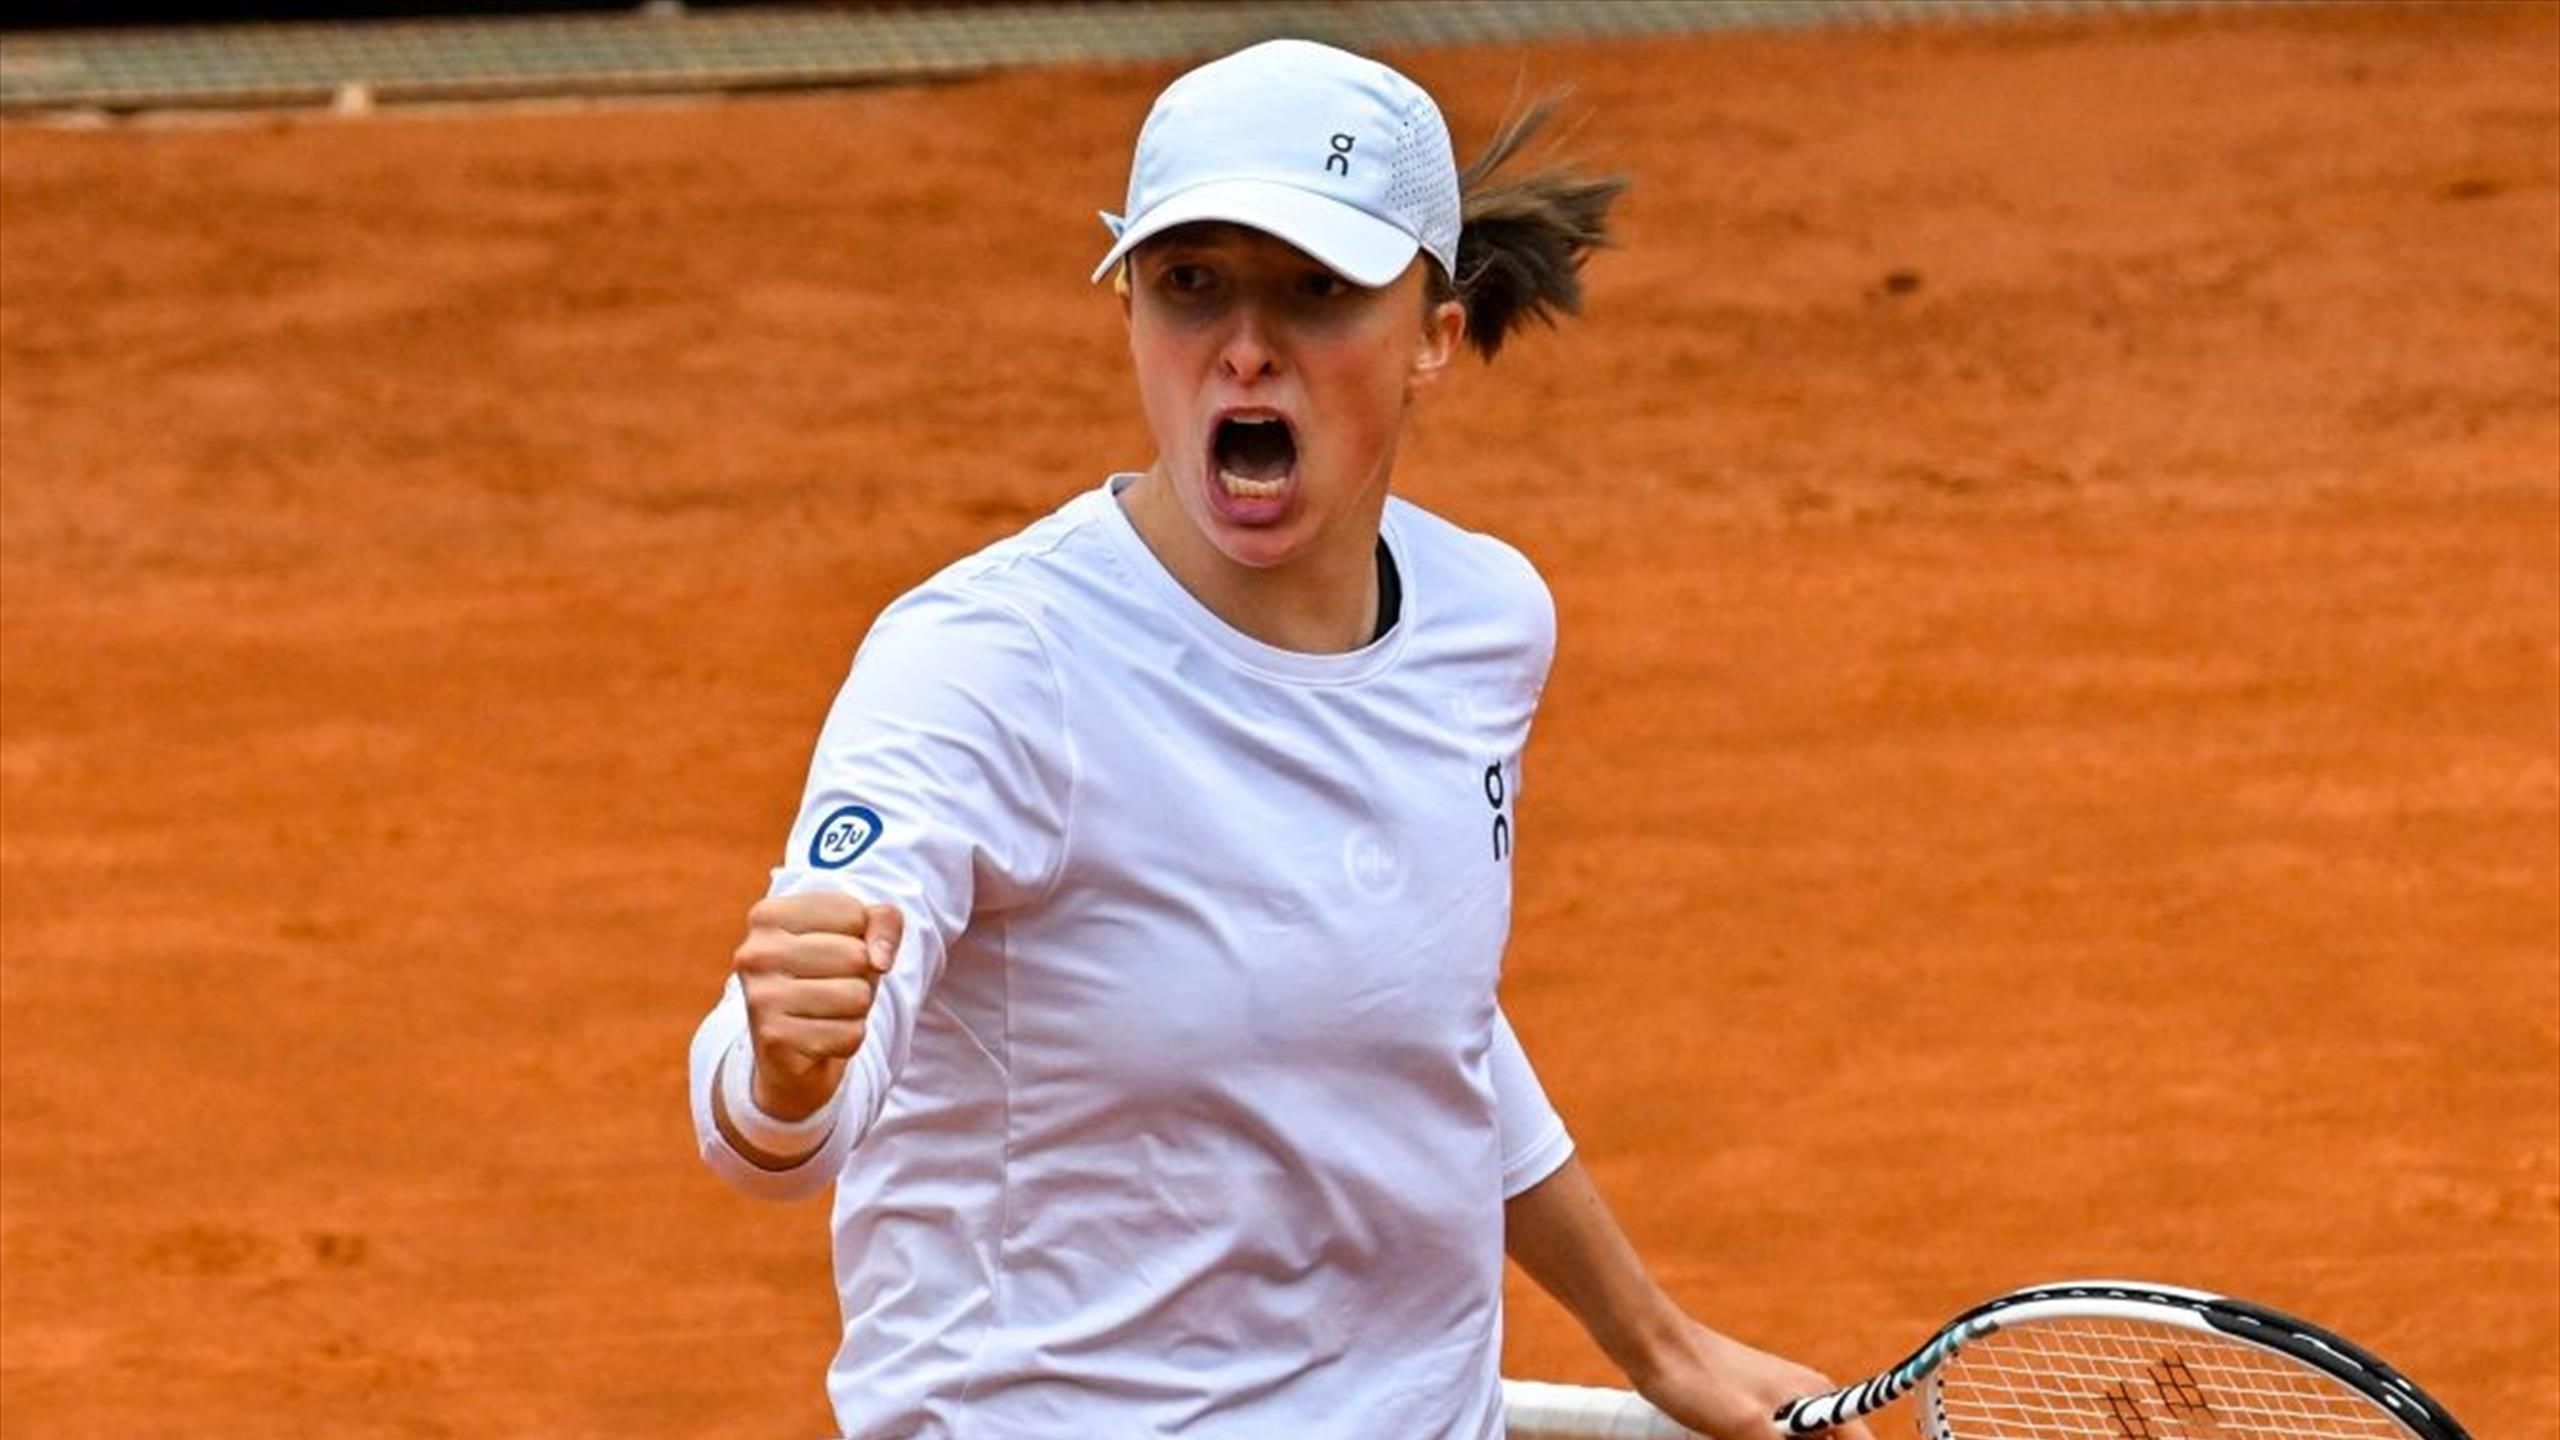 Iga Swiatek breezes past Donna Vekic into Italian Open quarter-finals, will play Elena Rybakina next